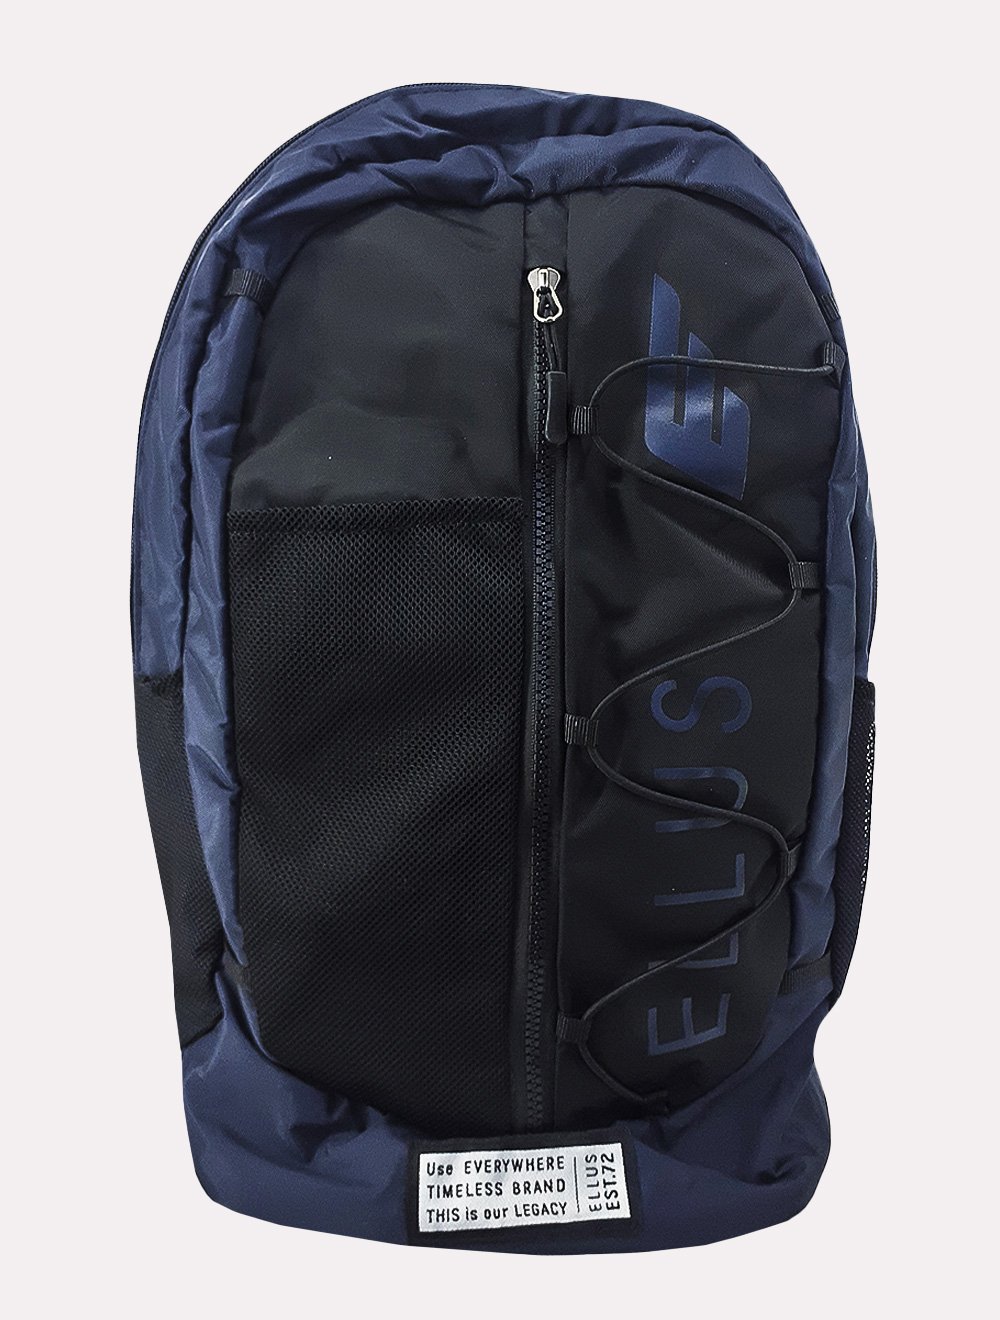 Mochila Ellus Backpack Nylon Sport Preta/Azul Marinho